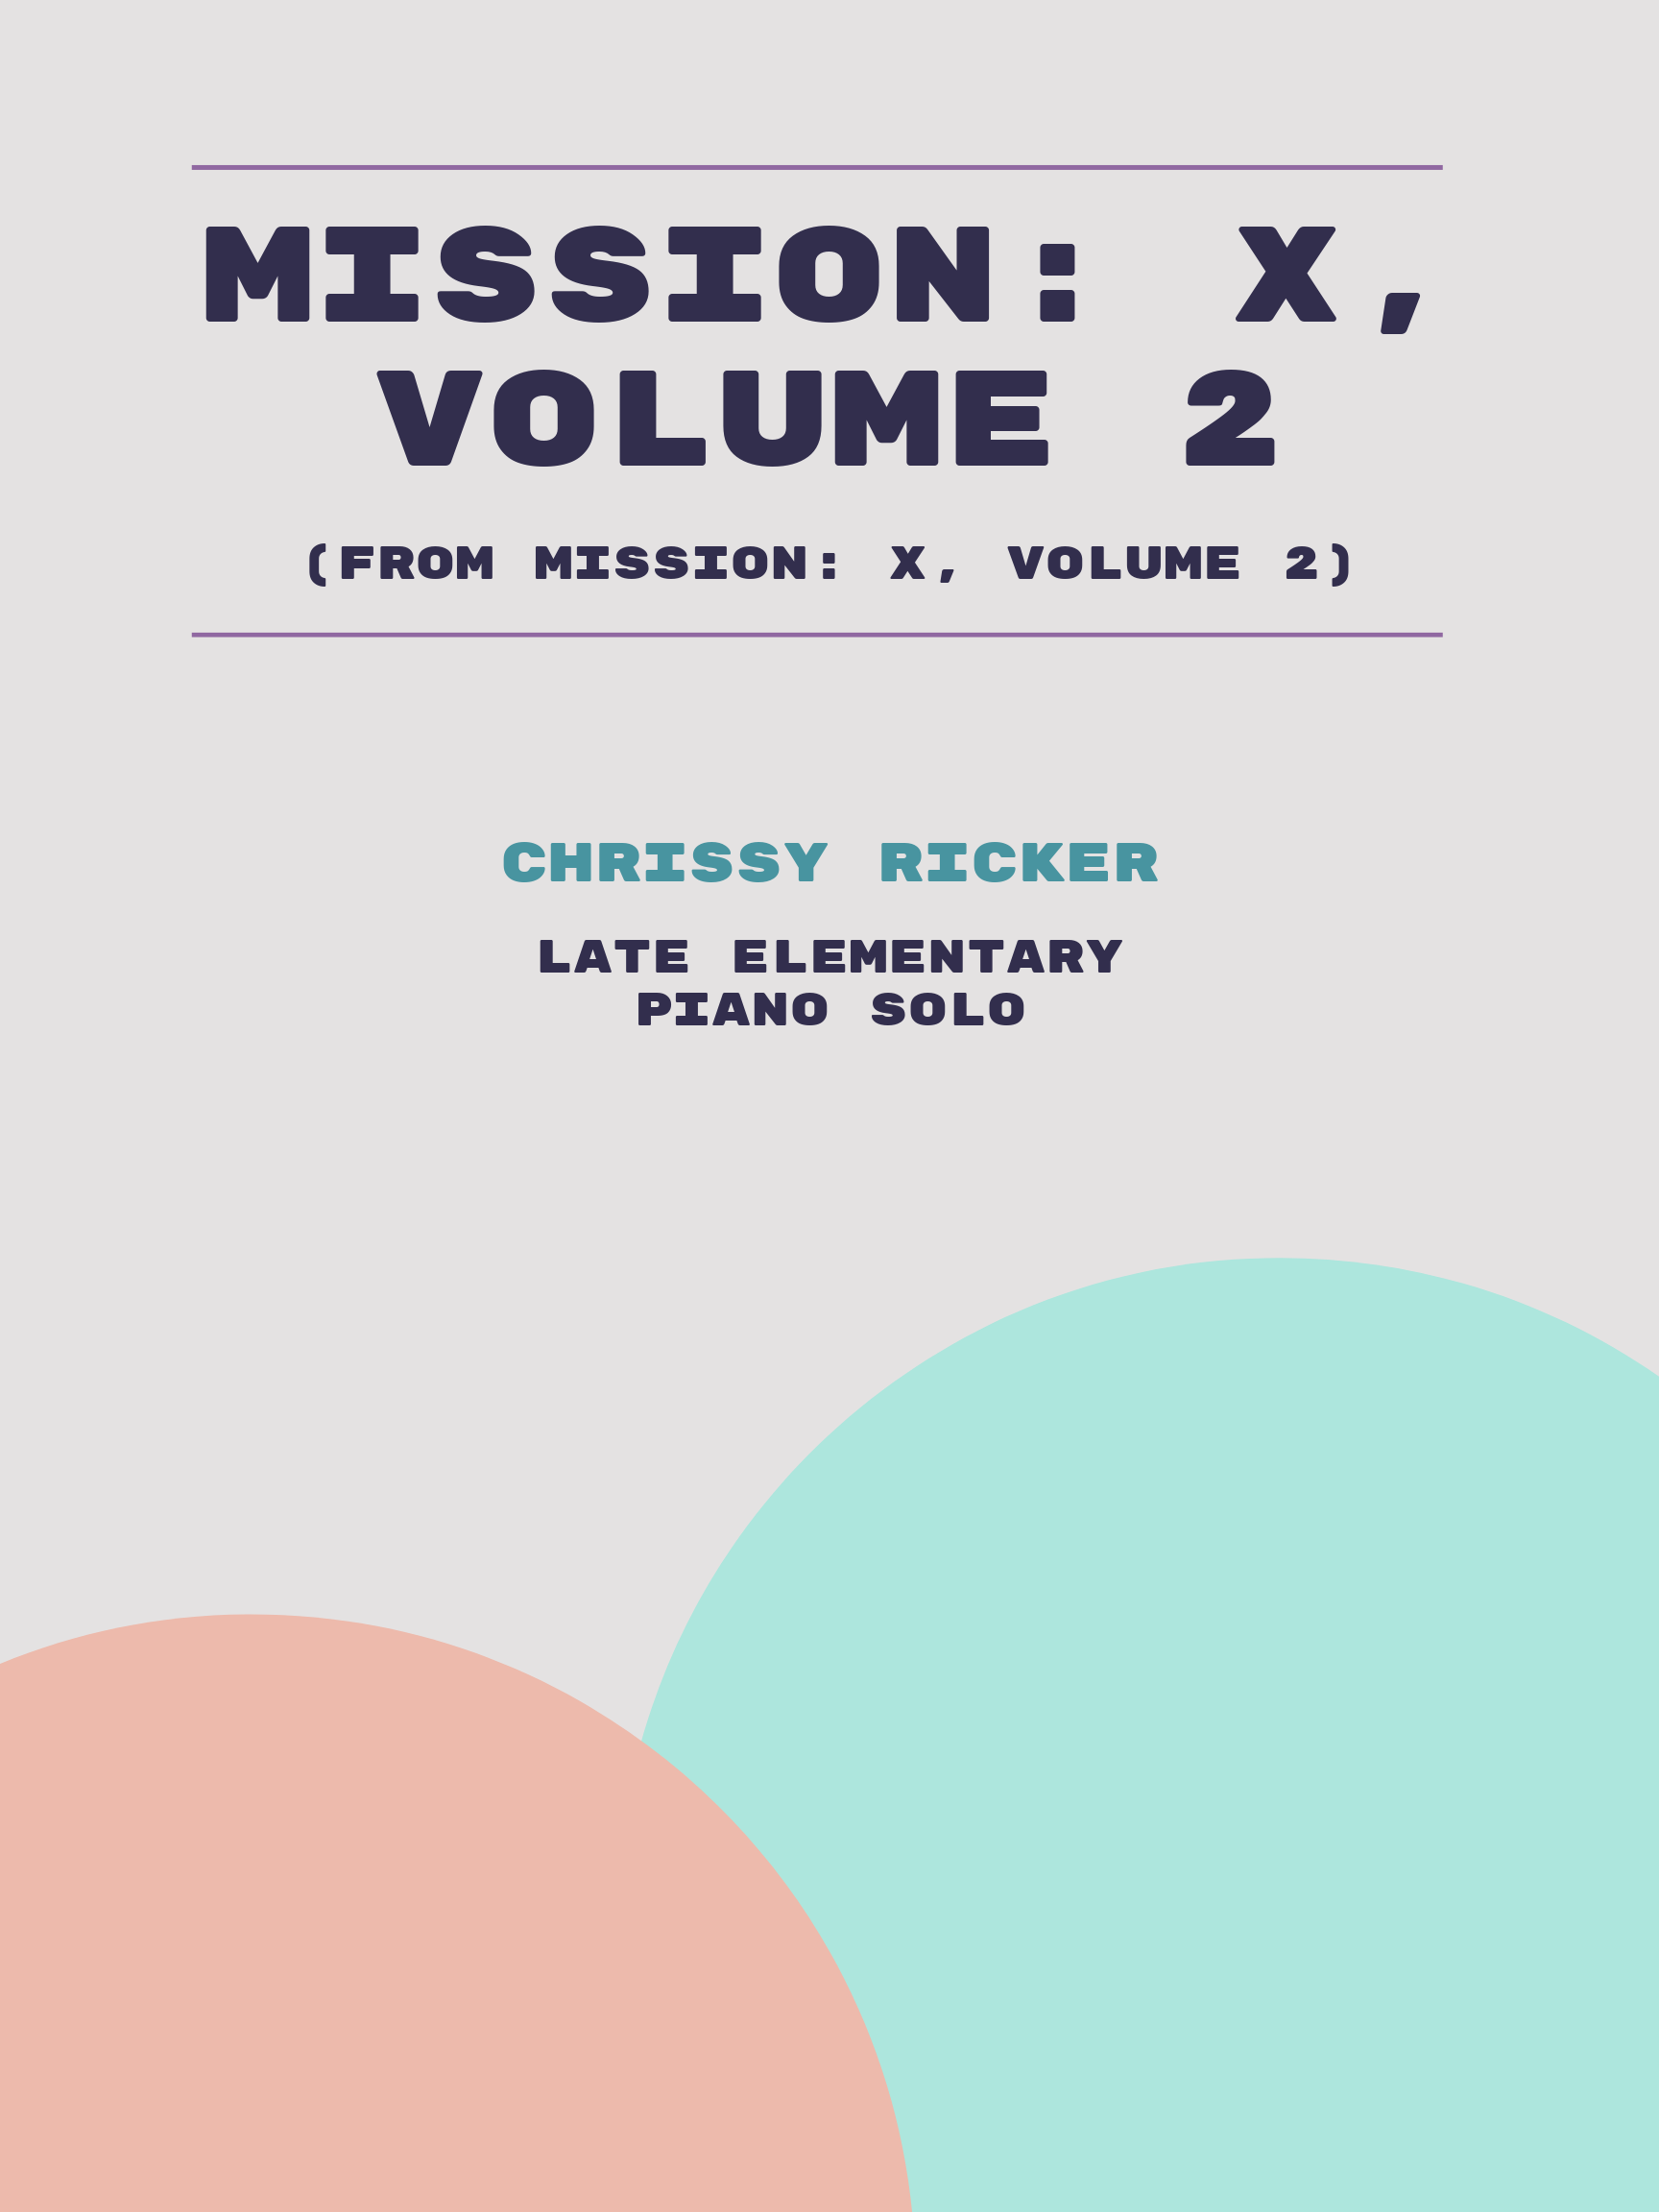 Mission: X, Volume 2 by Chrissy Ricker